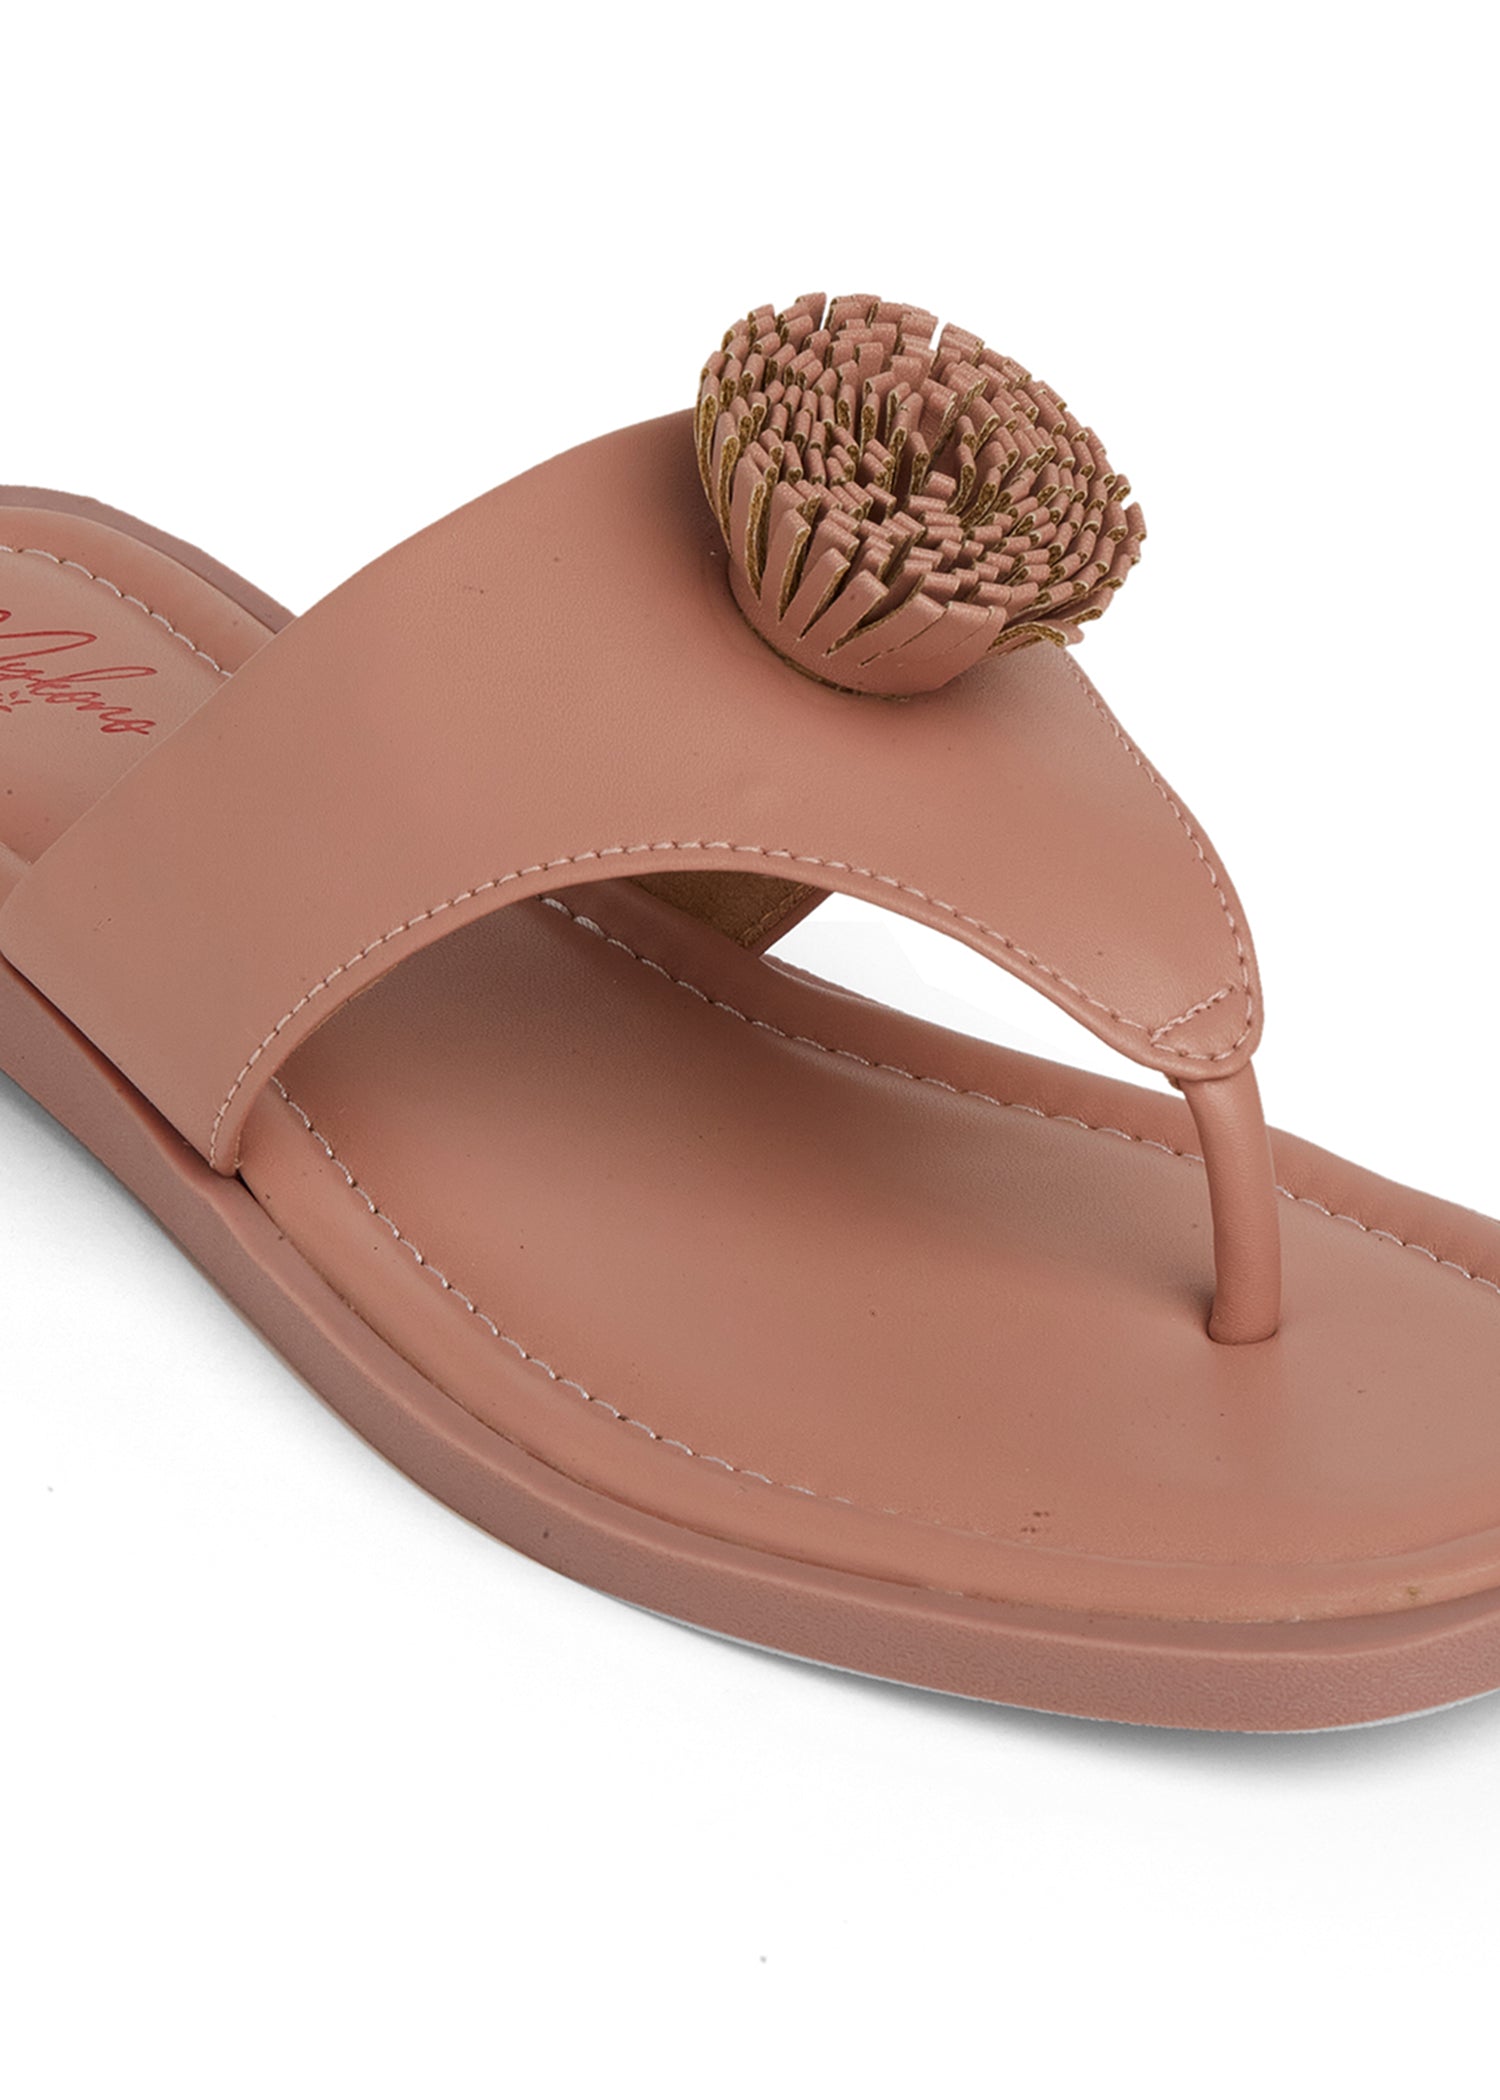 Buy Girls Green Casual Sandals Online | SKU: 57-4992-60-30-Metro Shoes